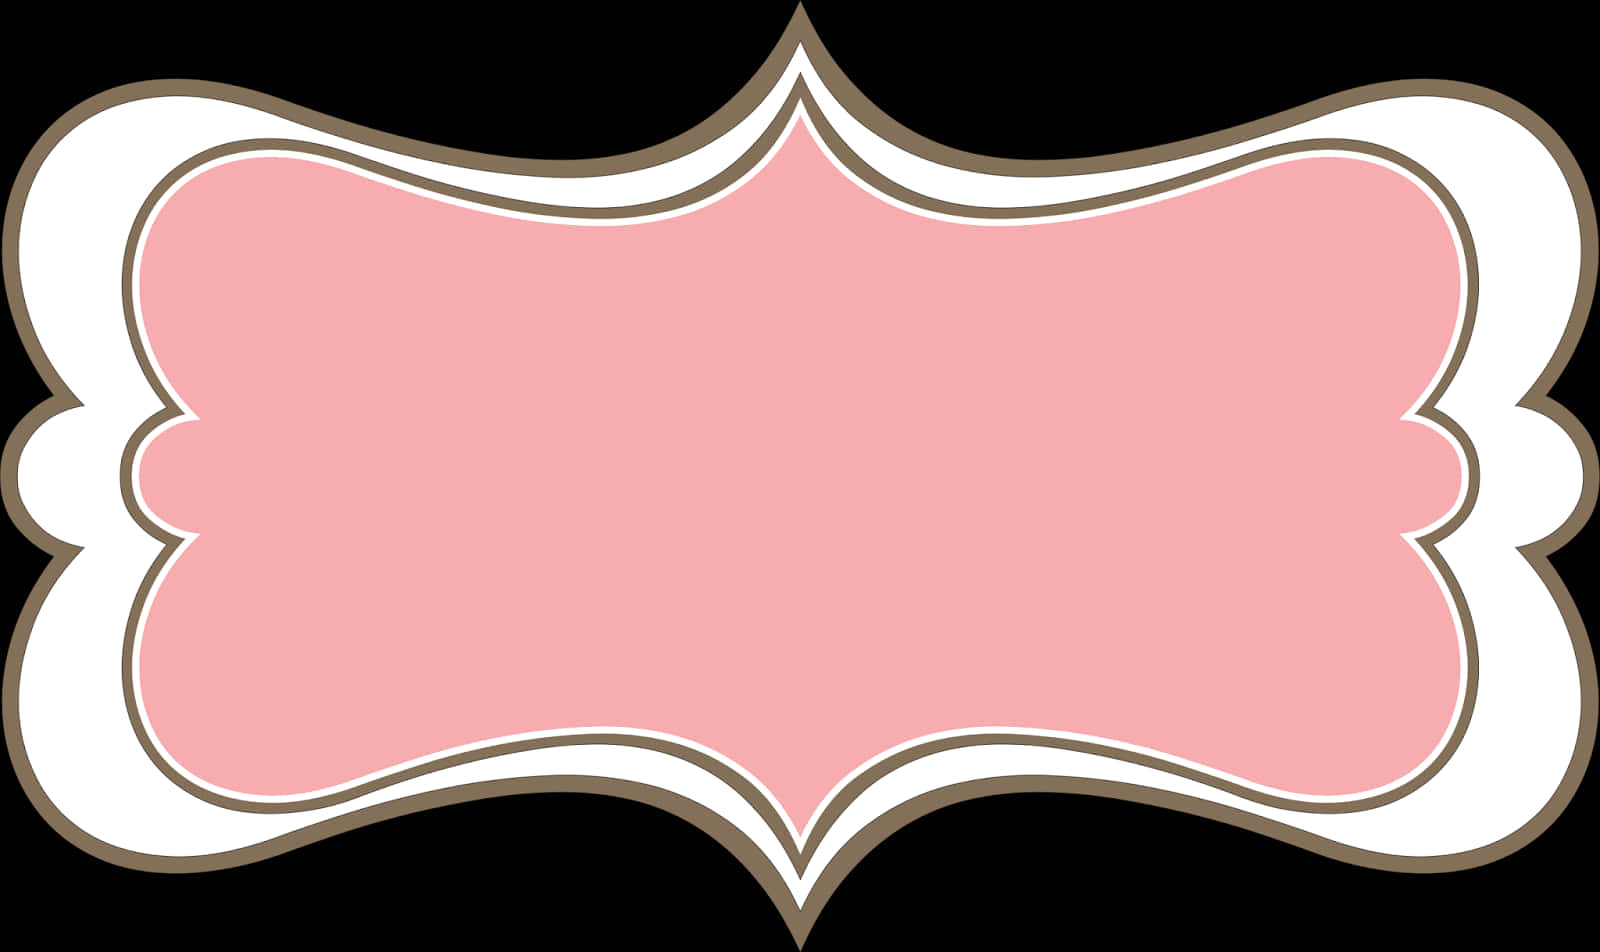 A Pink And Black Rectangular Frame